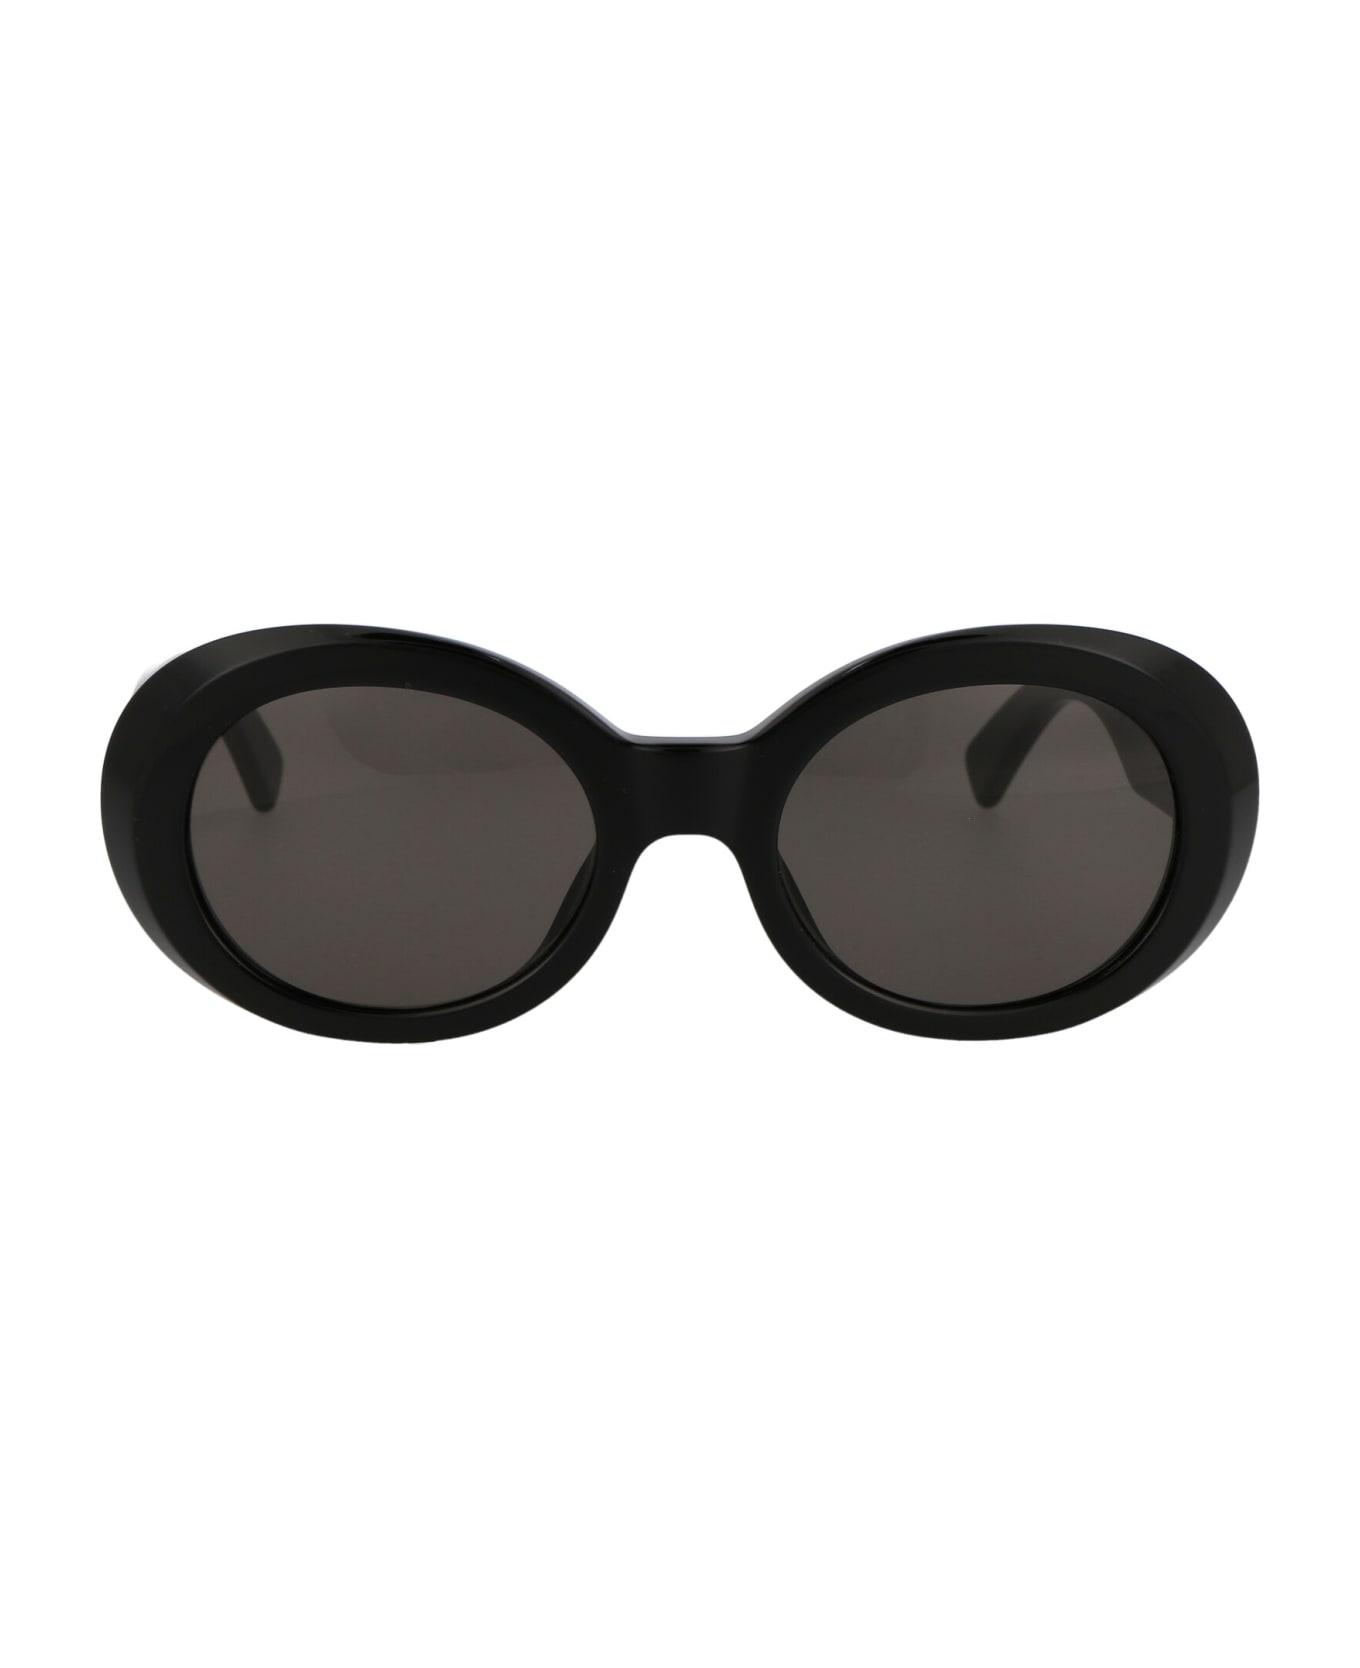 AMBUSH Kurt Sunglasses - 1007 BLACK サングラス